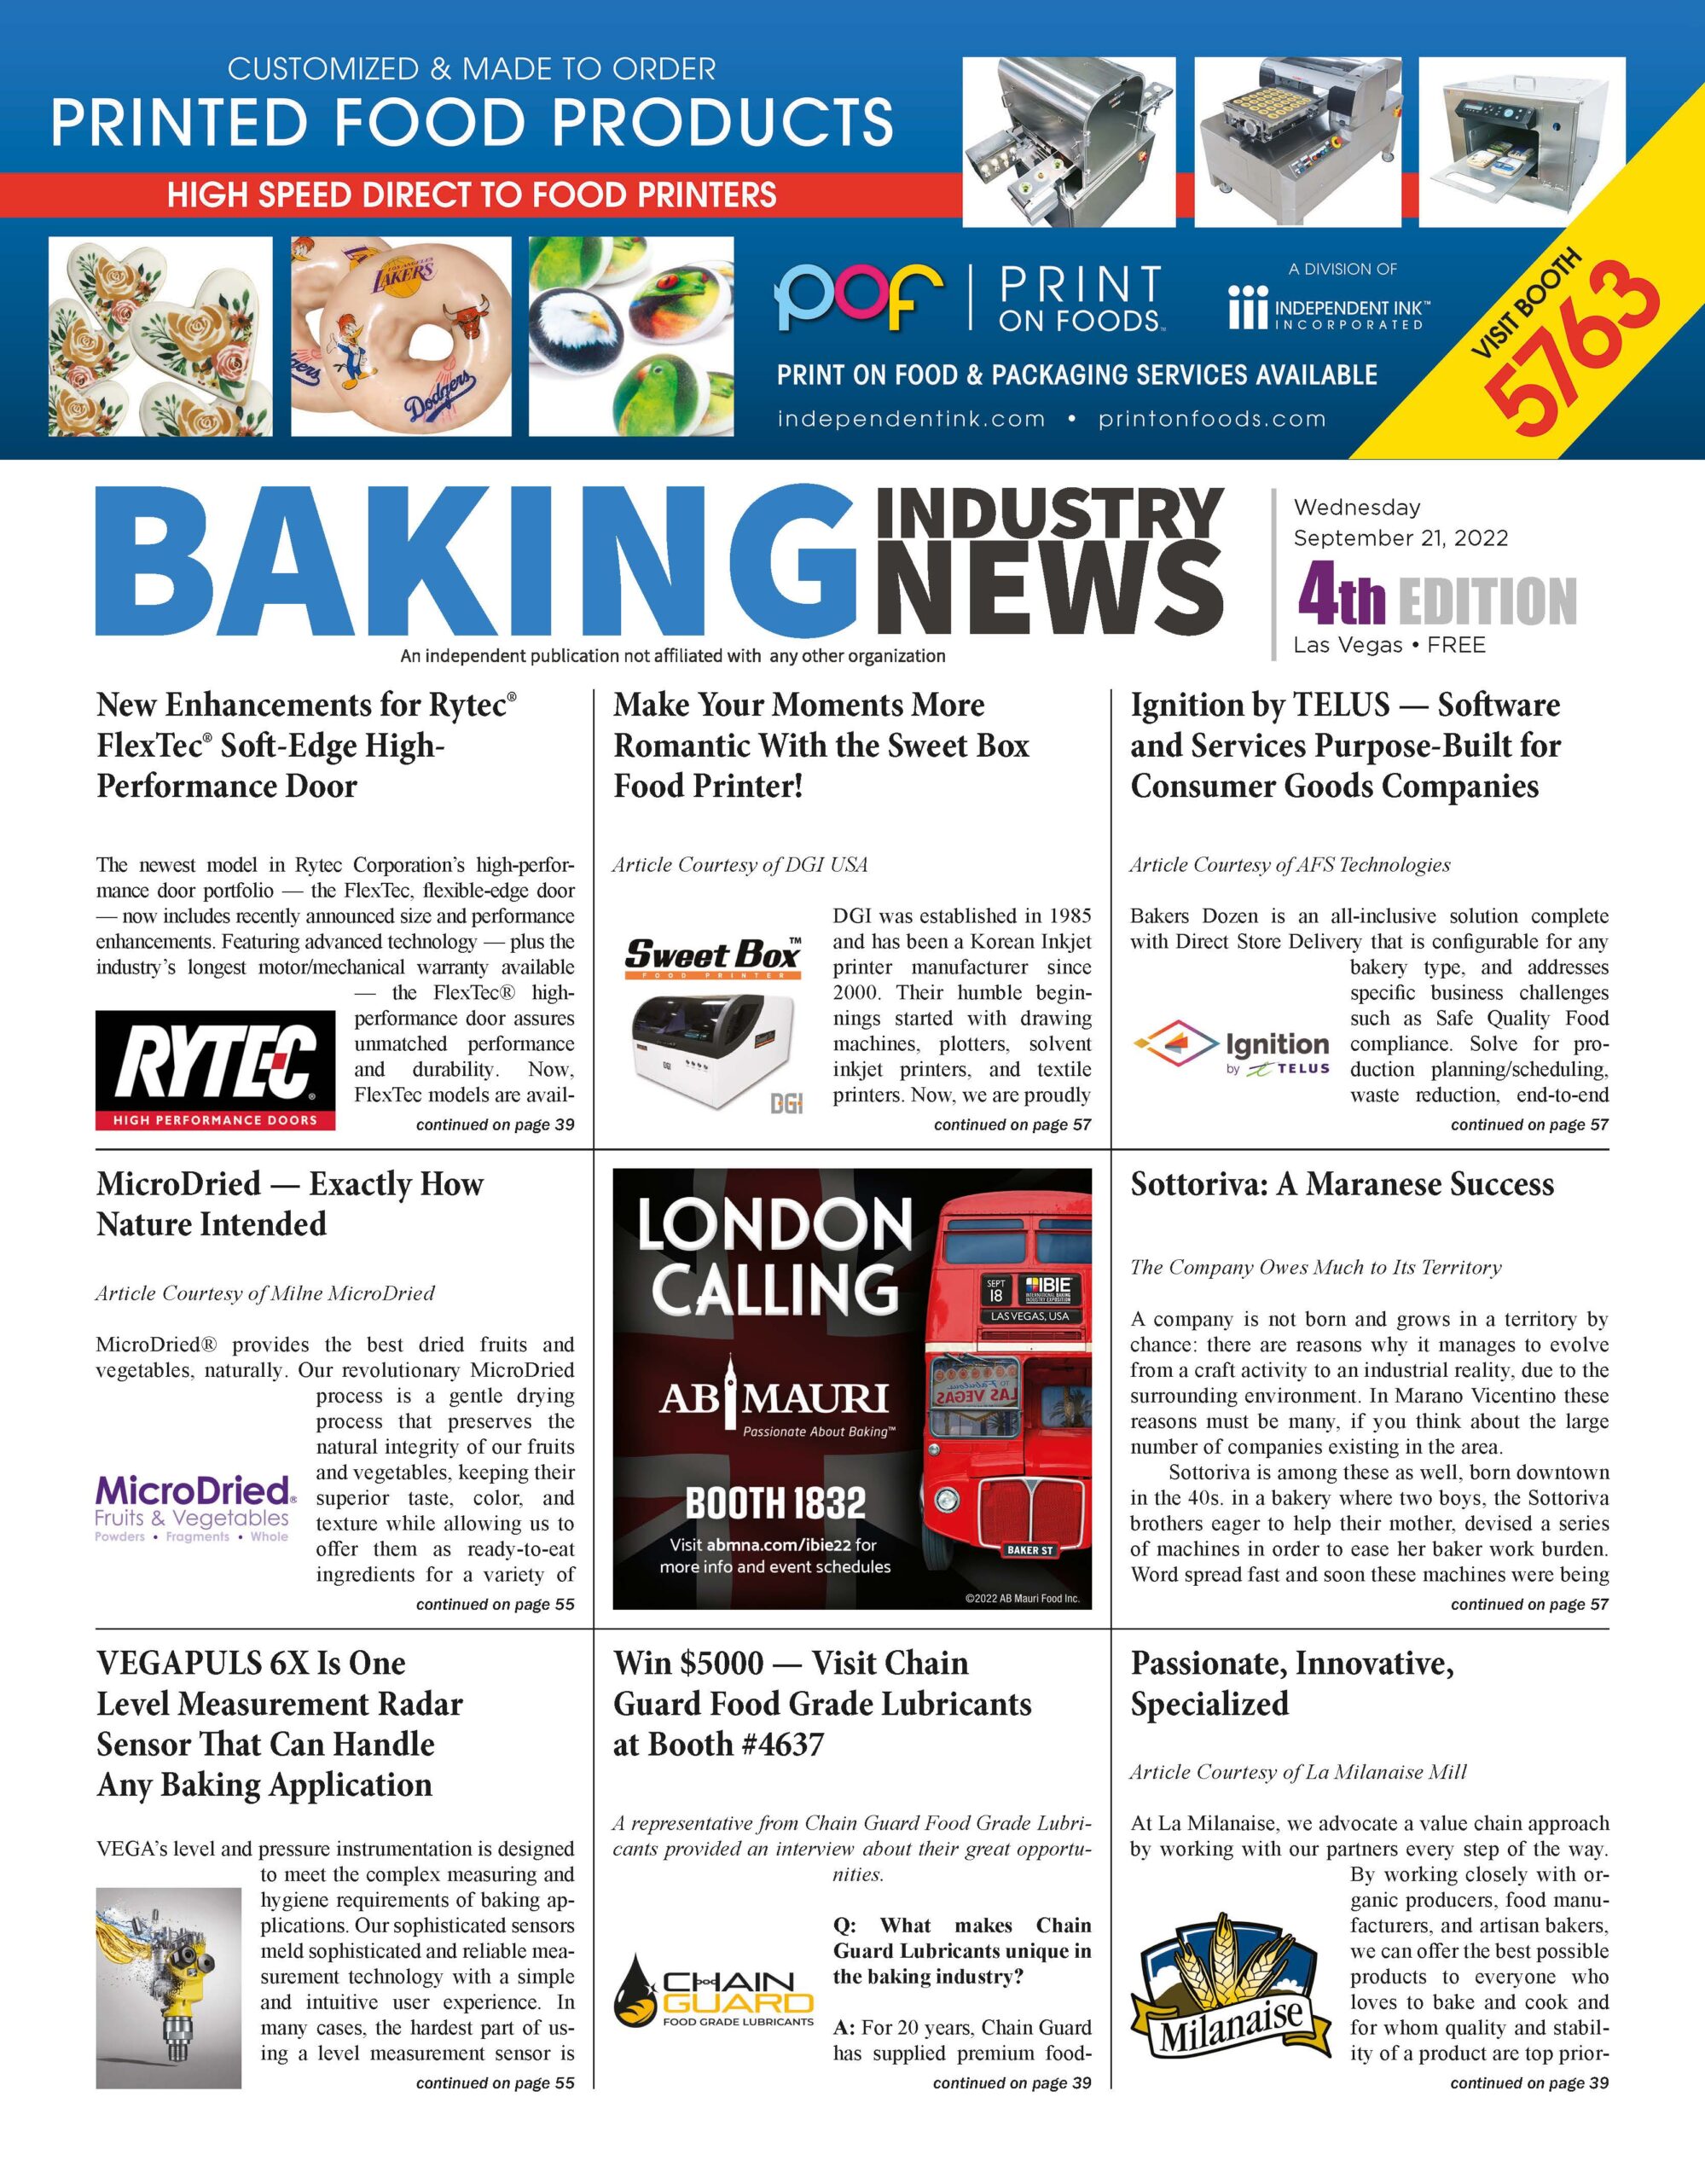 Baking Industry News